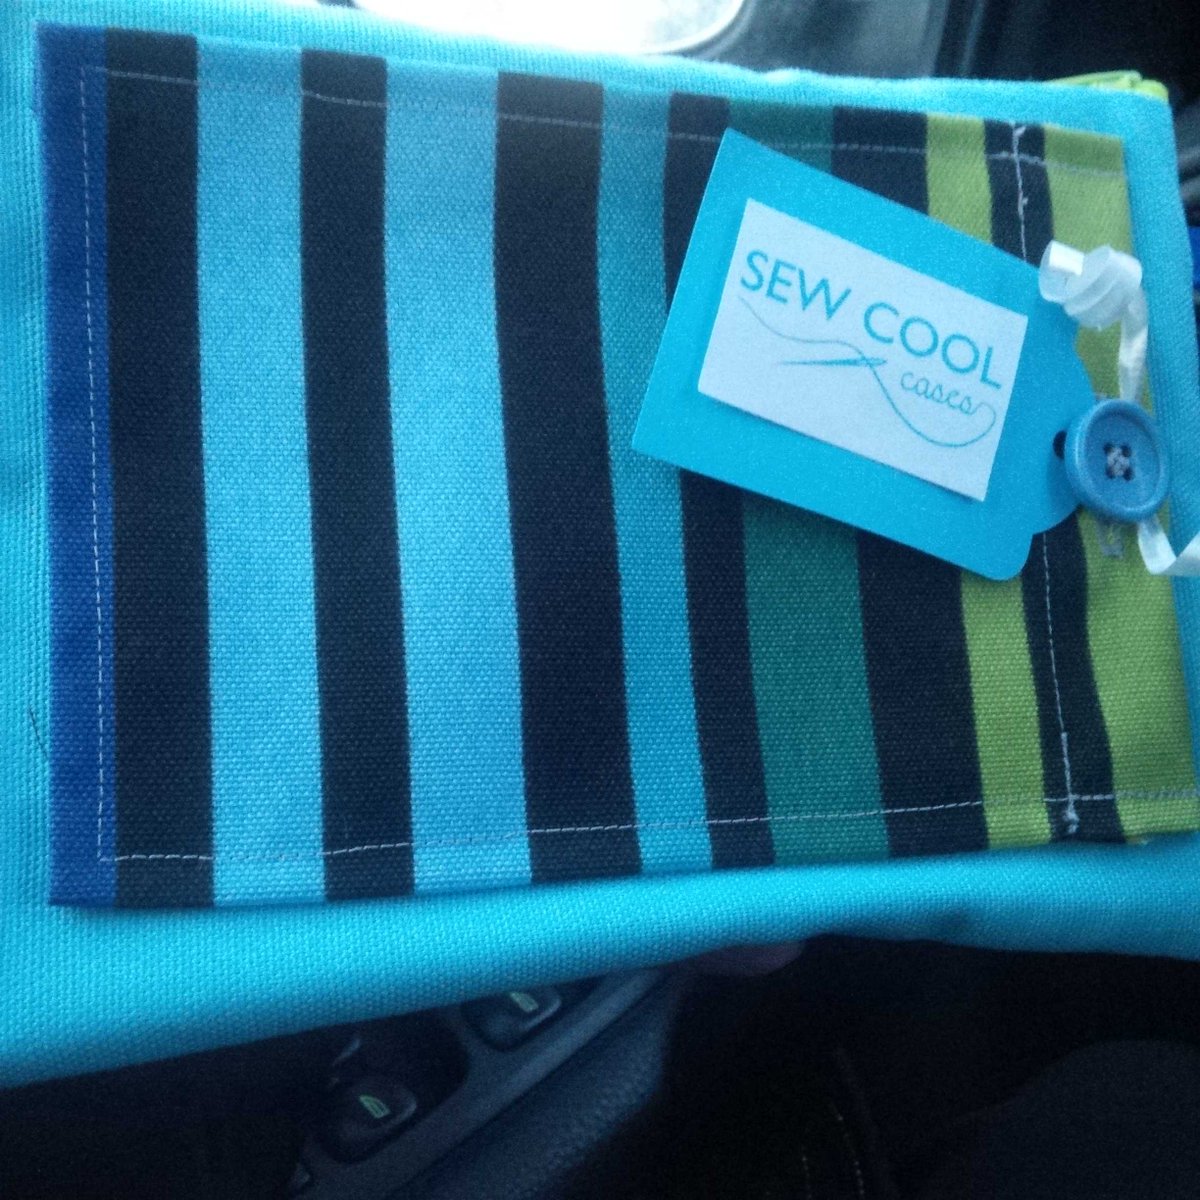 Look what I just bought @UWStratford on my way home. #SewCool - JuniorAchievers @Beacon Herald stratfordbeaconherald.com/2015/01/11/str…